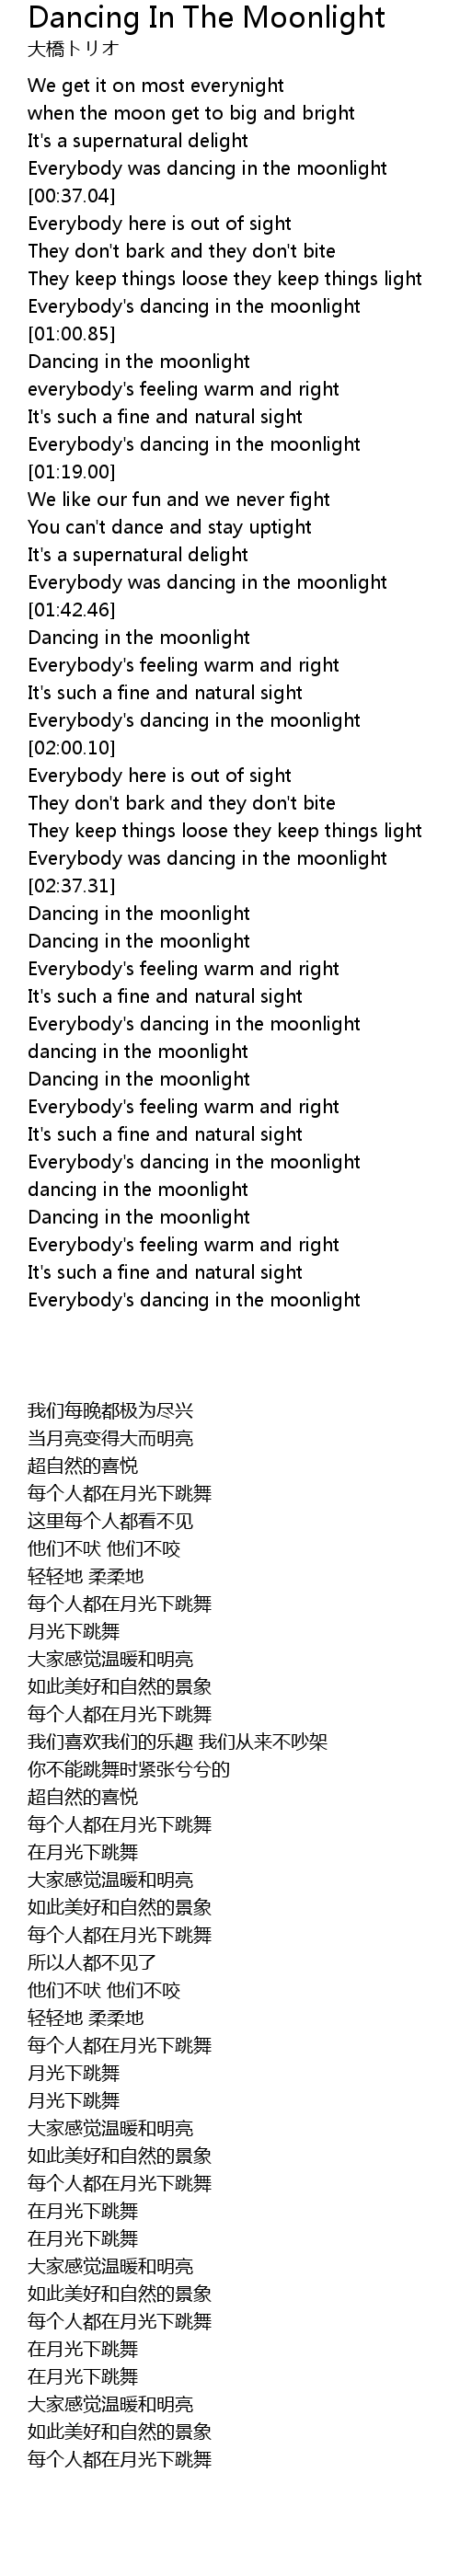 In moonlight dancing lyrics the Toploader